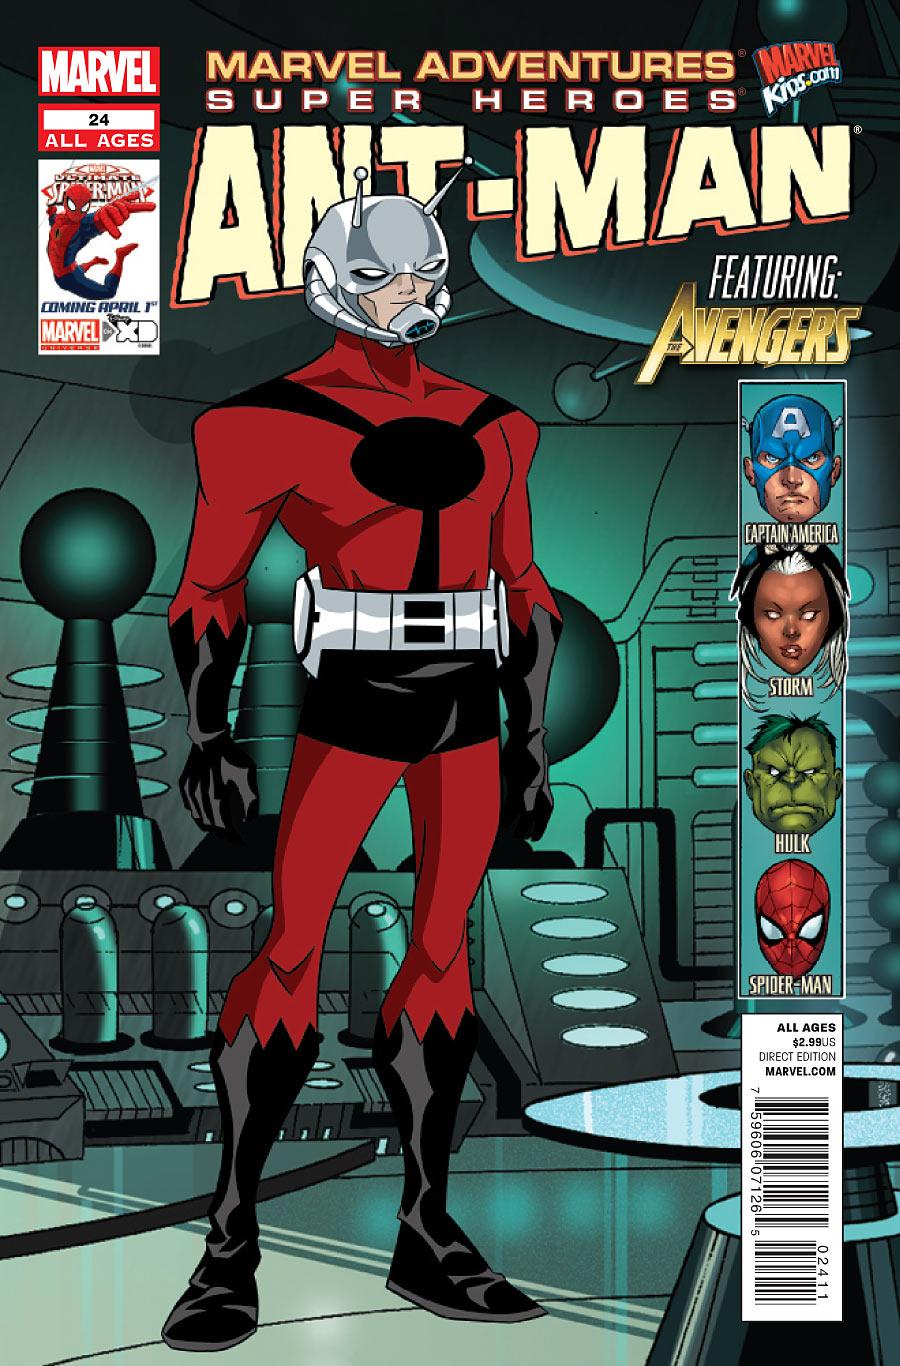 Marvel Adventures: Super Heroes Vol. 2 #24